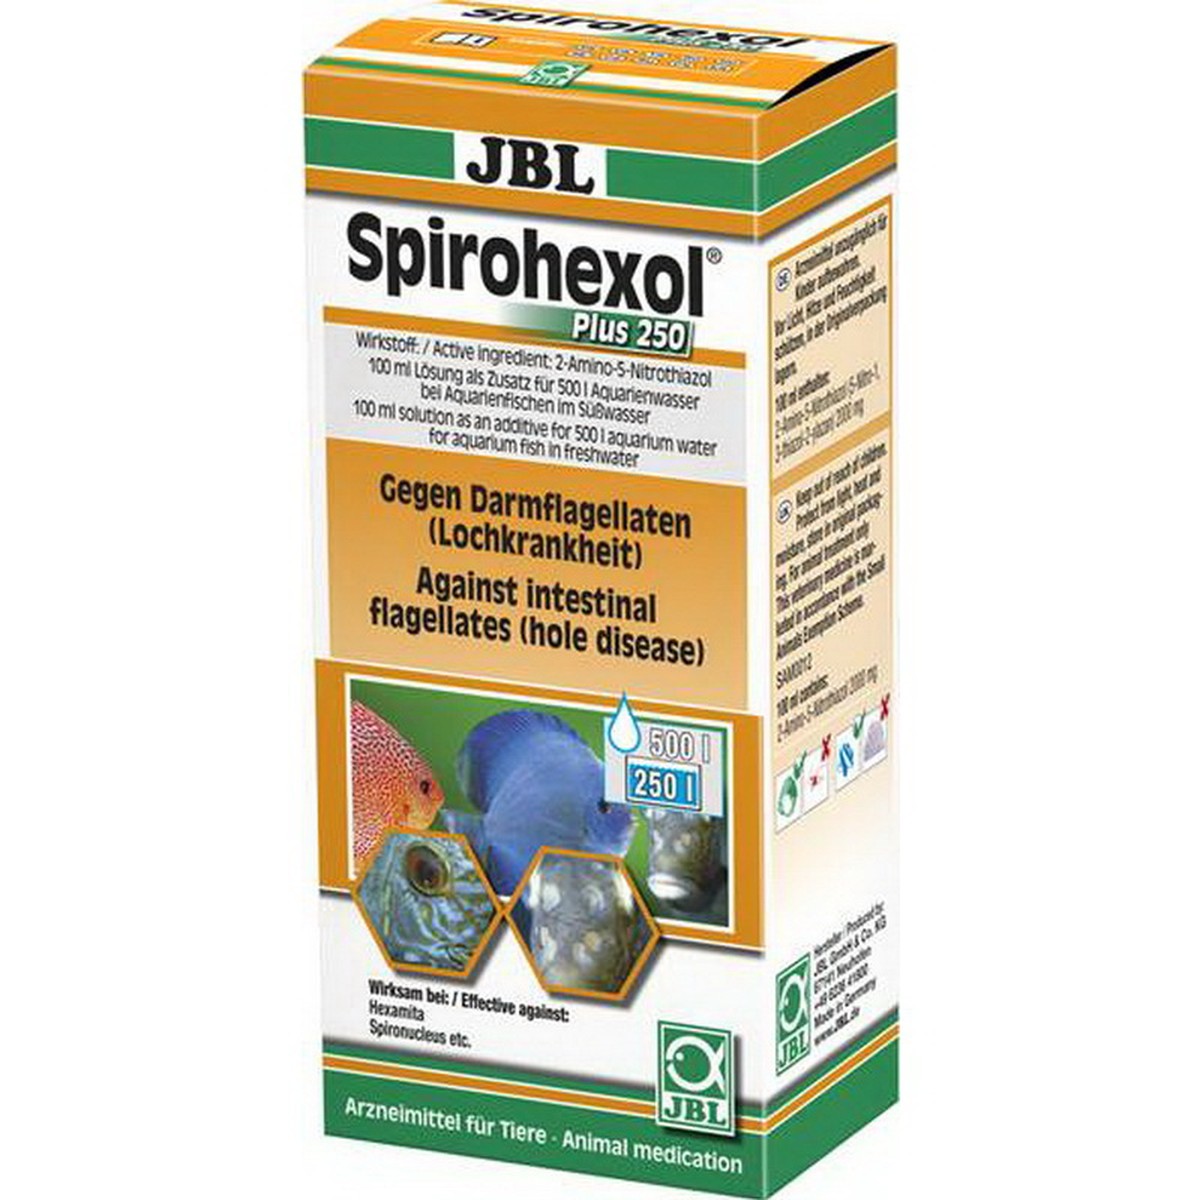   JBL Spirohexol Plus 250 DE  100 ml